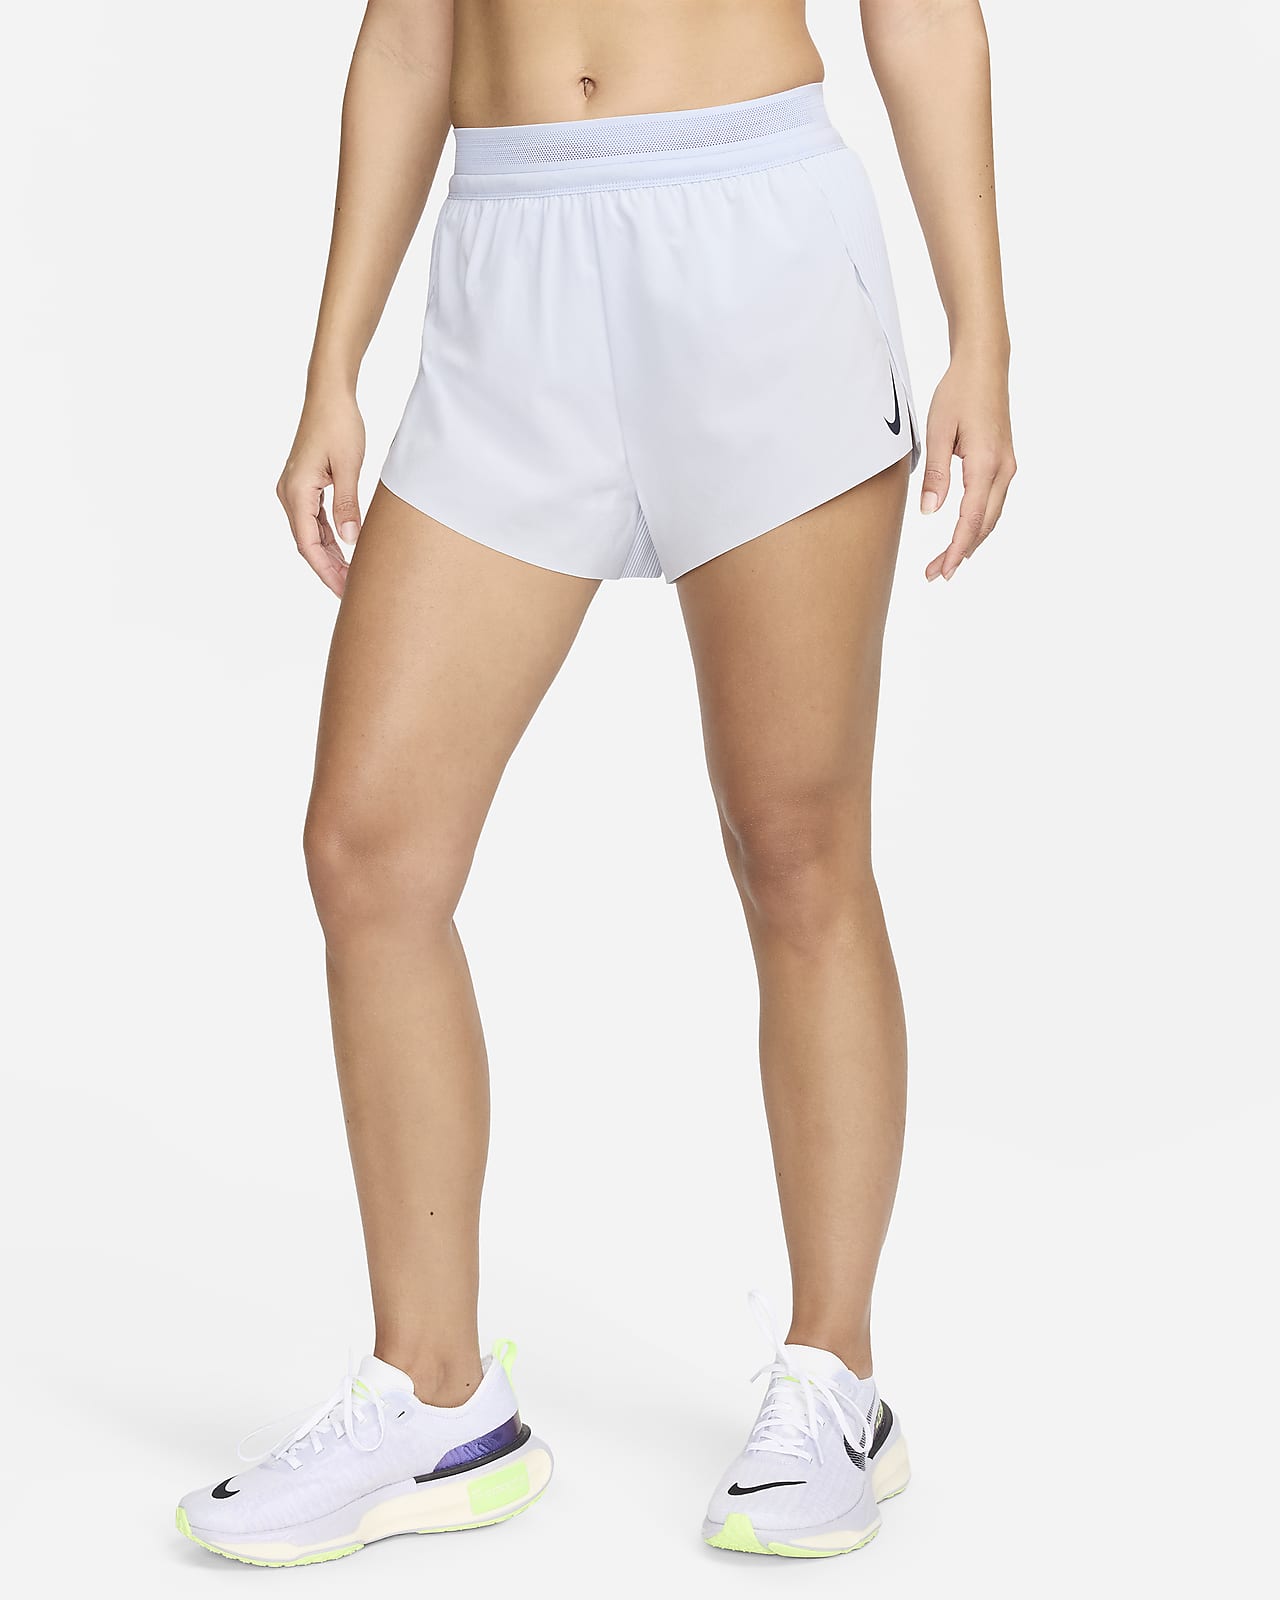 Nike Women's One Dri-Fit 7'' Run Short Tight, by Nike